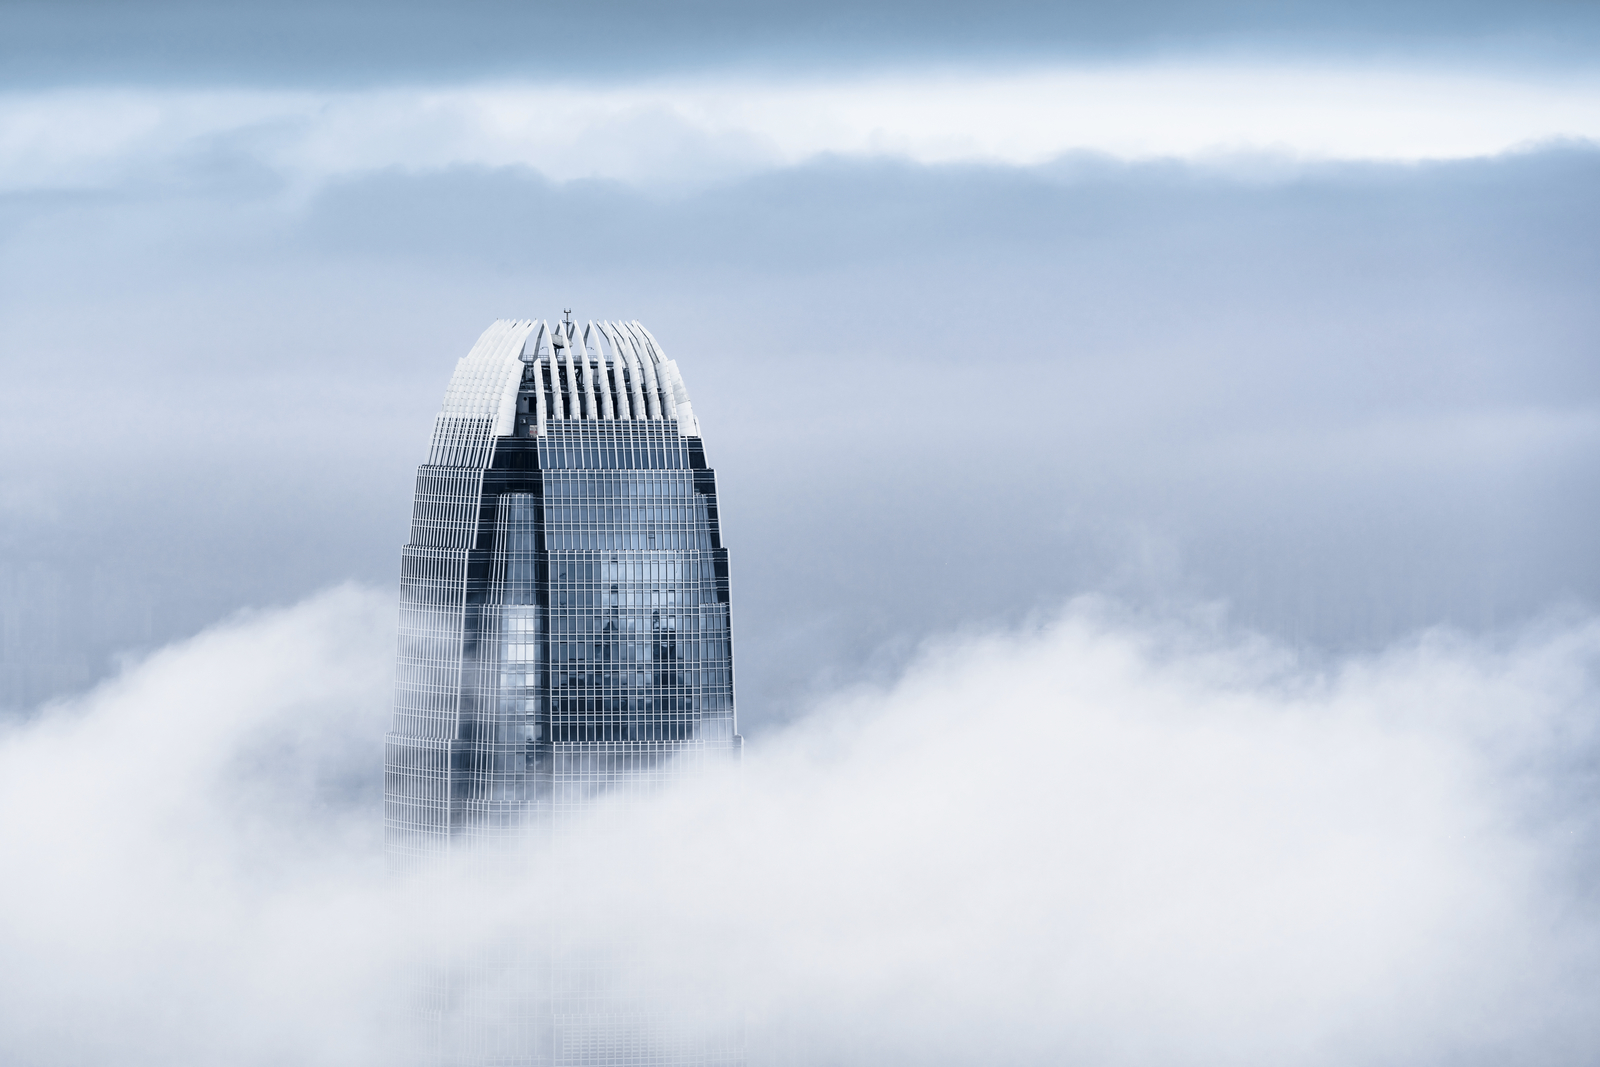 Skyscraper amidst the fog in Hong Kong.